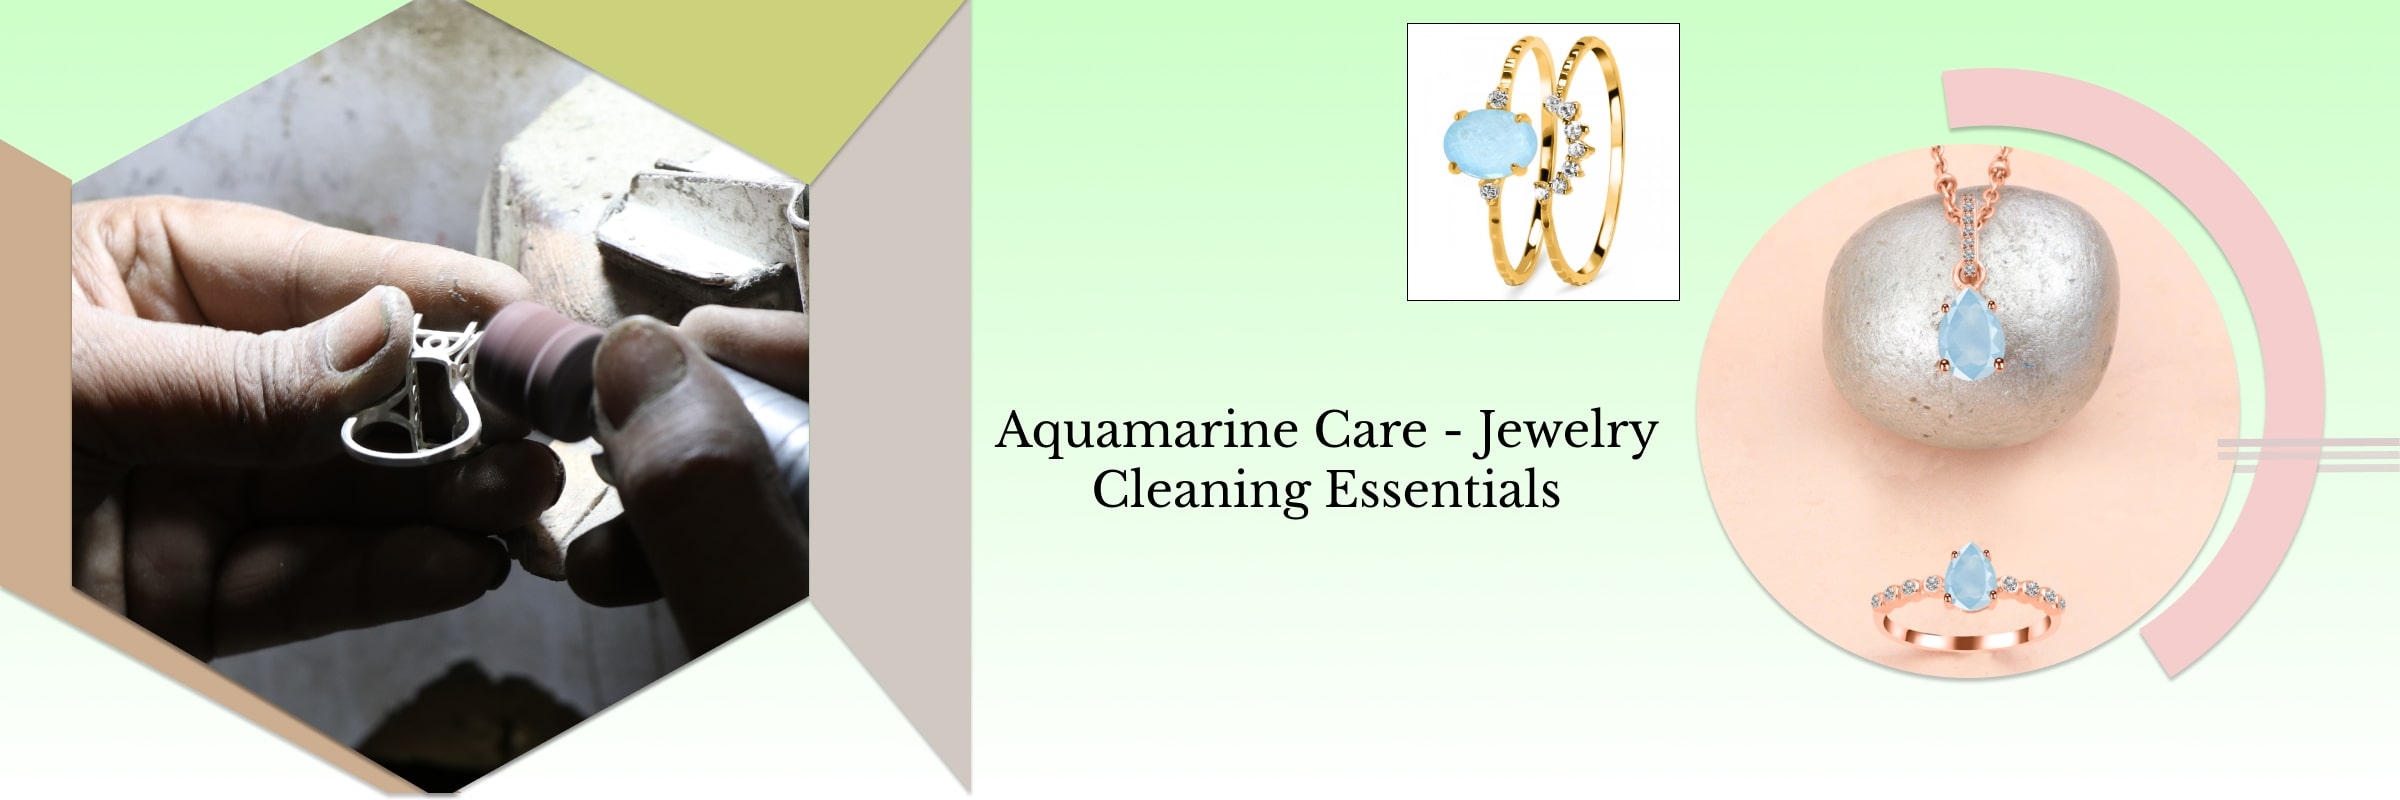 Care & Cleaning of Aquamarine Jewelry